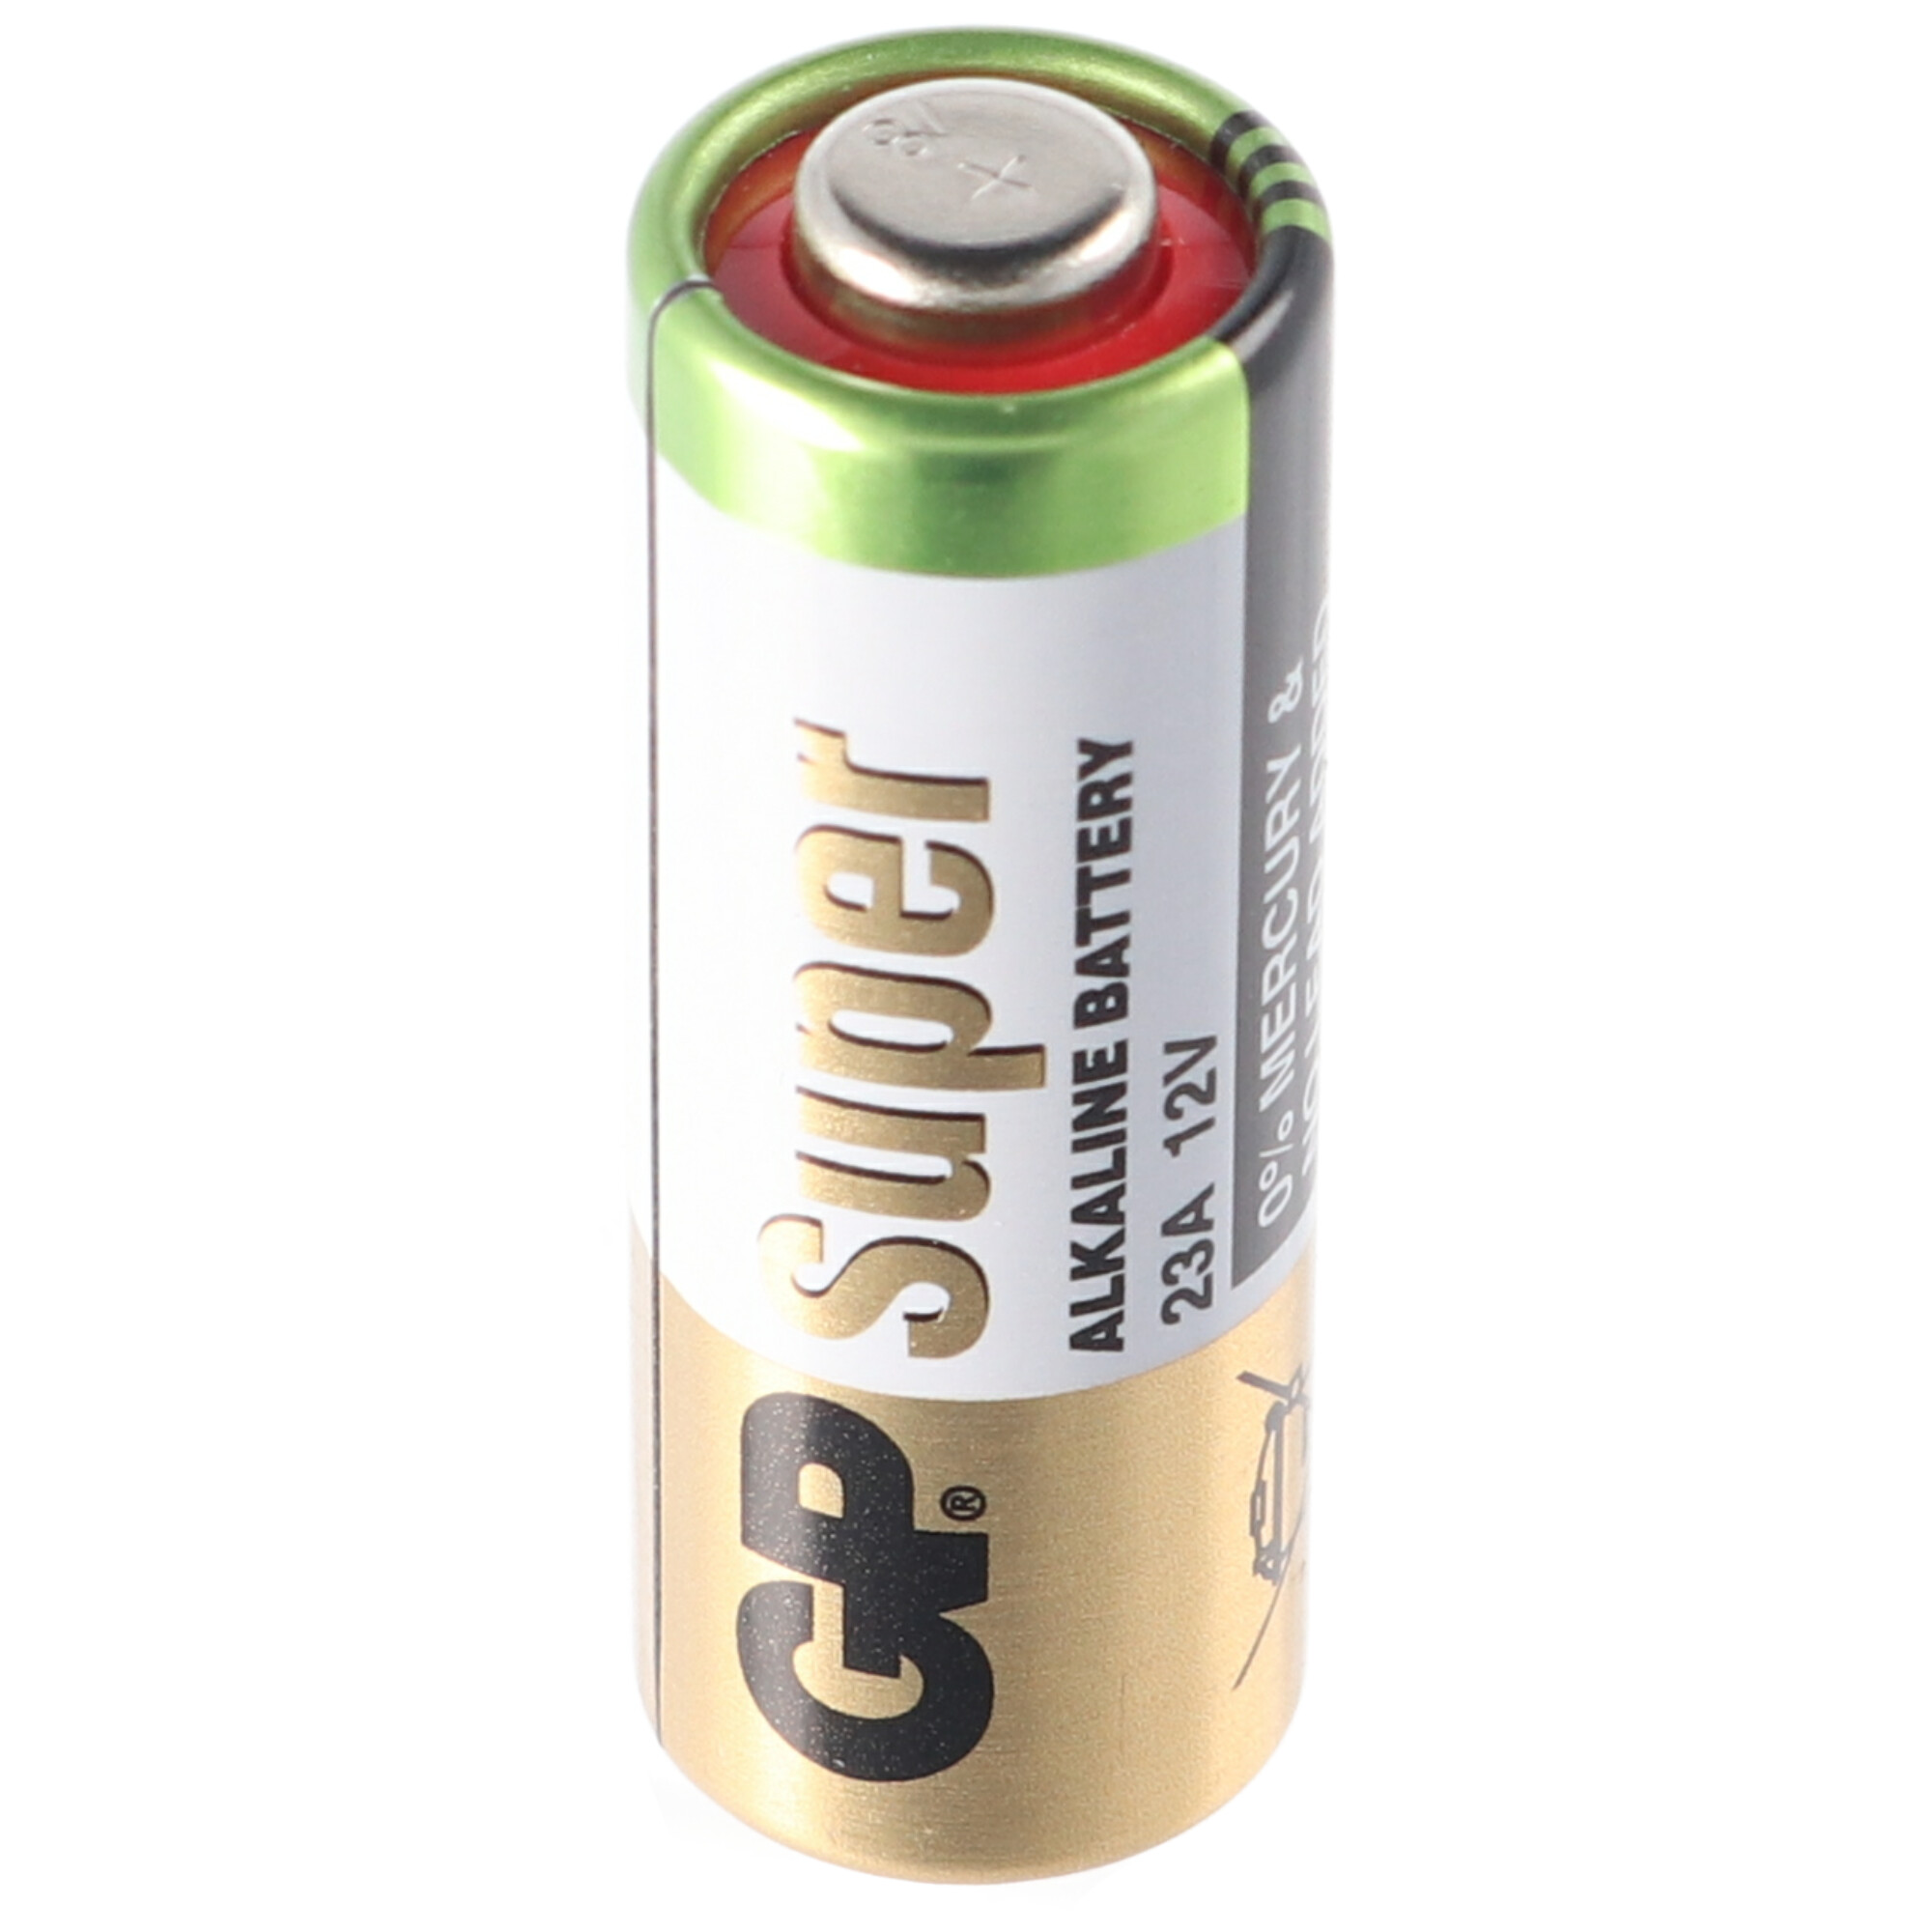 5 Stück GP23A 12 Volt Super High Voltage Alkaline Batterie 23Ae, A23, VA23GA, MS21, MN21, 8LR932, 28x10mm